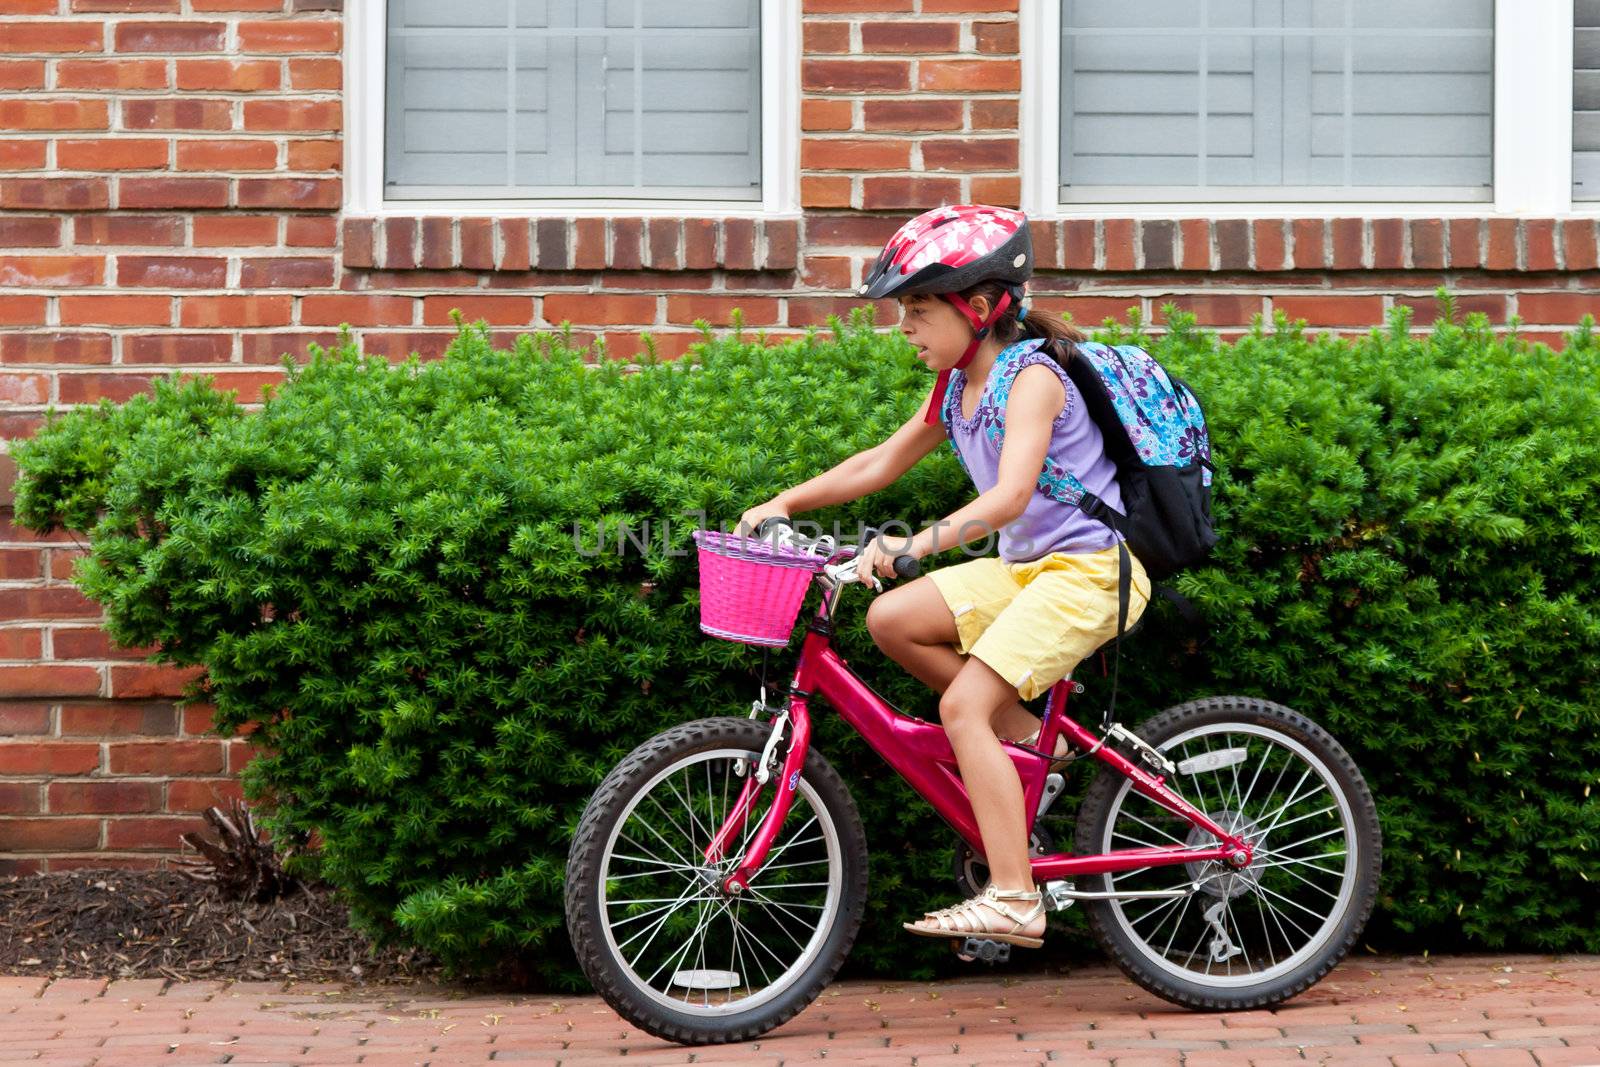 Kids Biking to School by DashaRosato